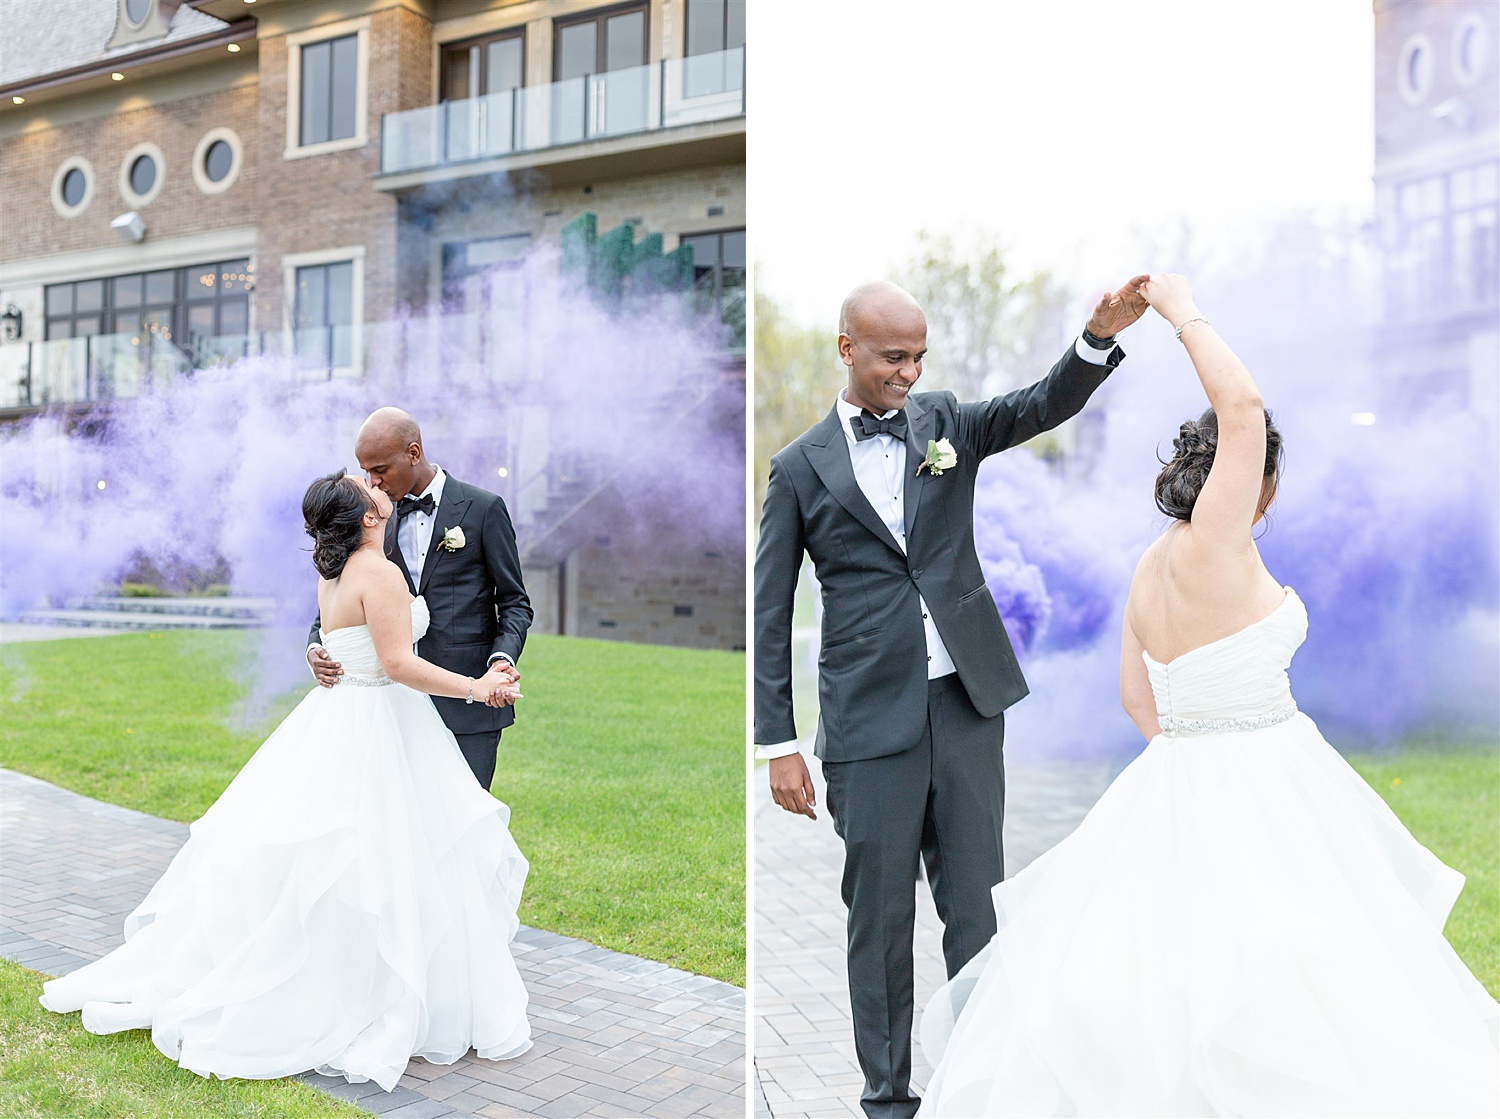 Purple smoke bomb photos at wedding